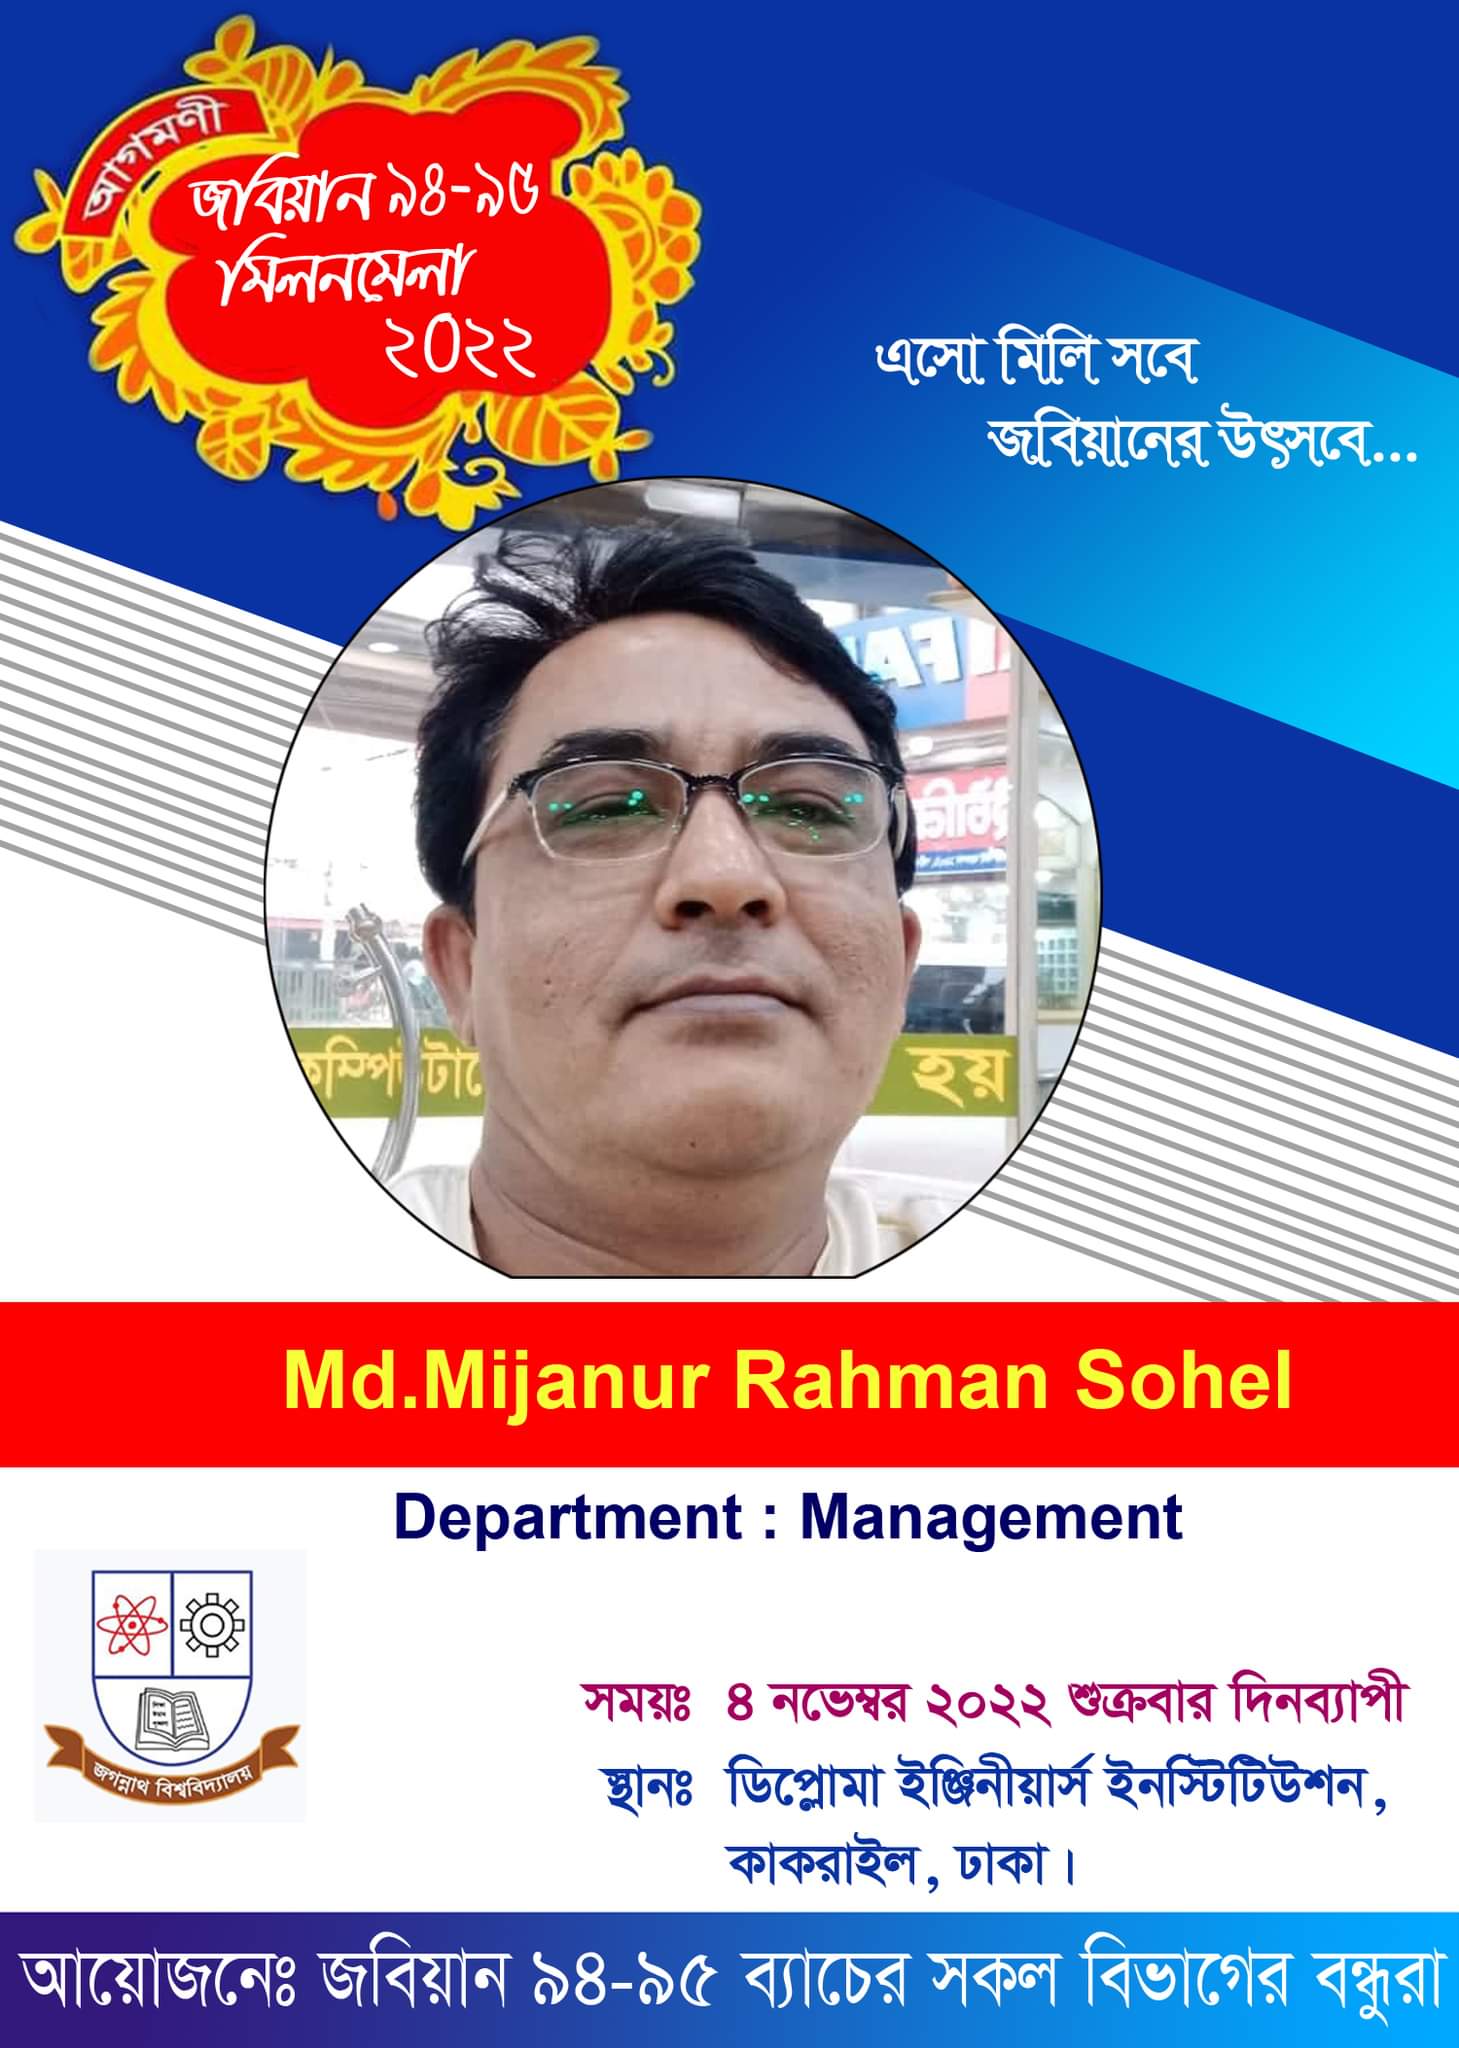 Md. Mijanur Rahman Sohel